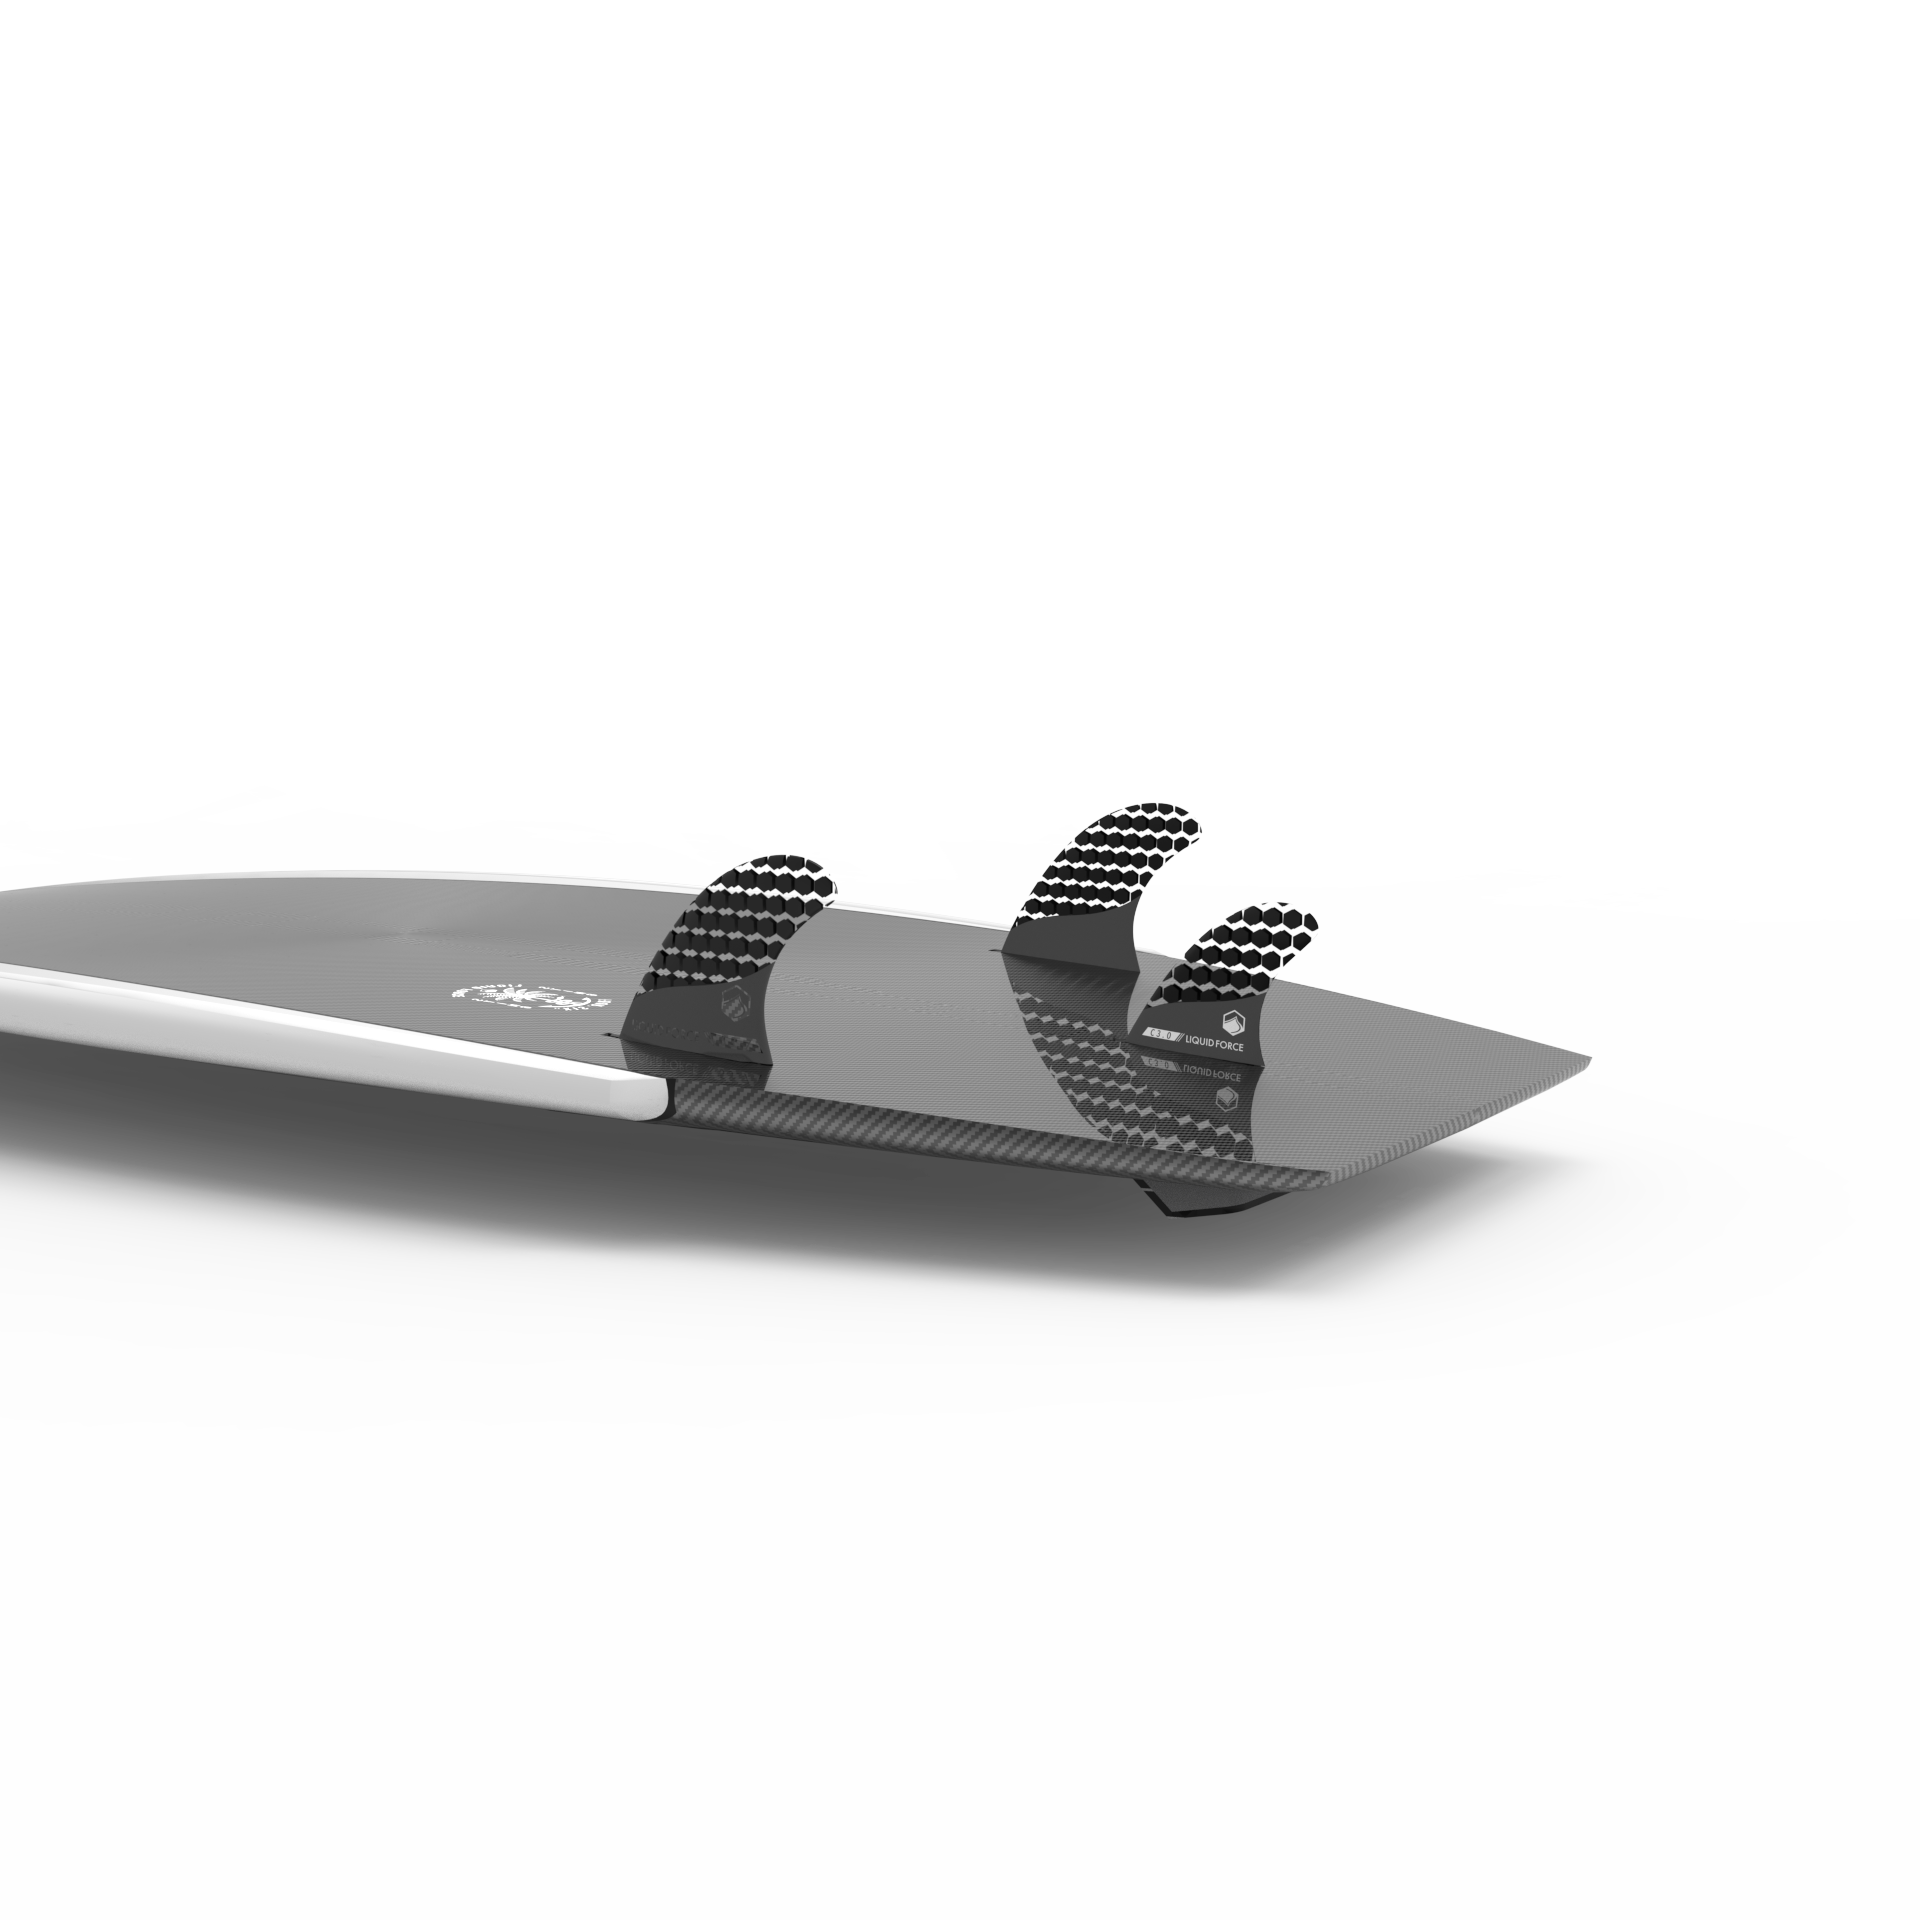 A Liquid Force 2023 Sting LTD Wakesurf Board on a durable white background.